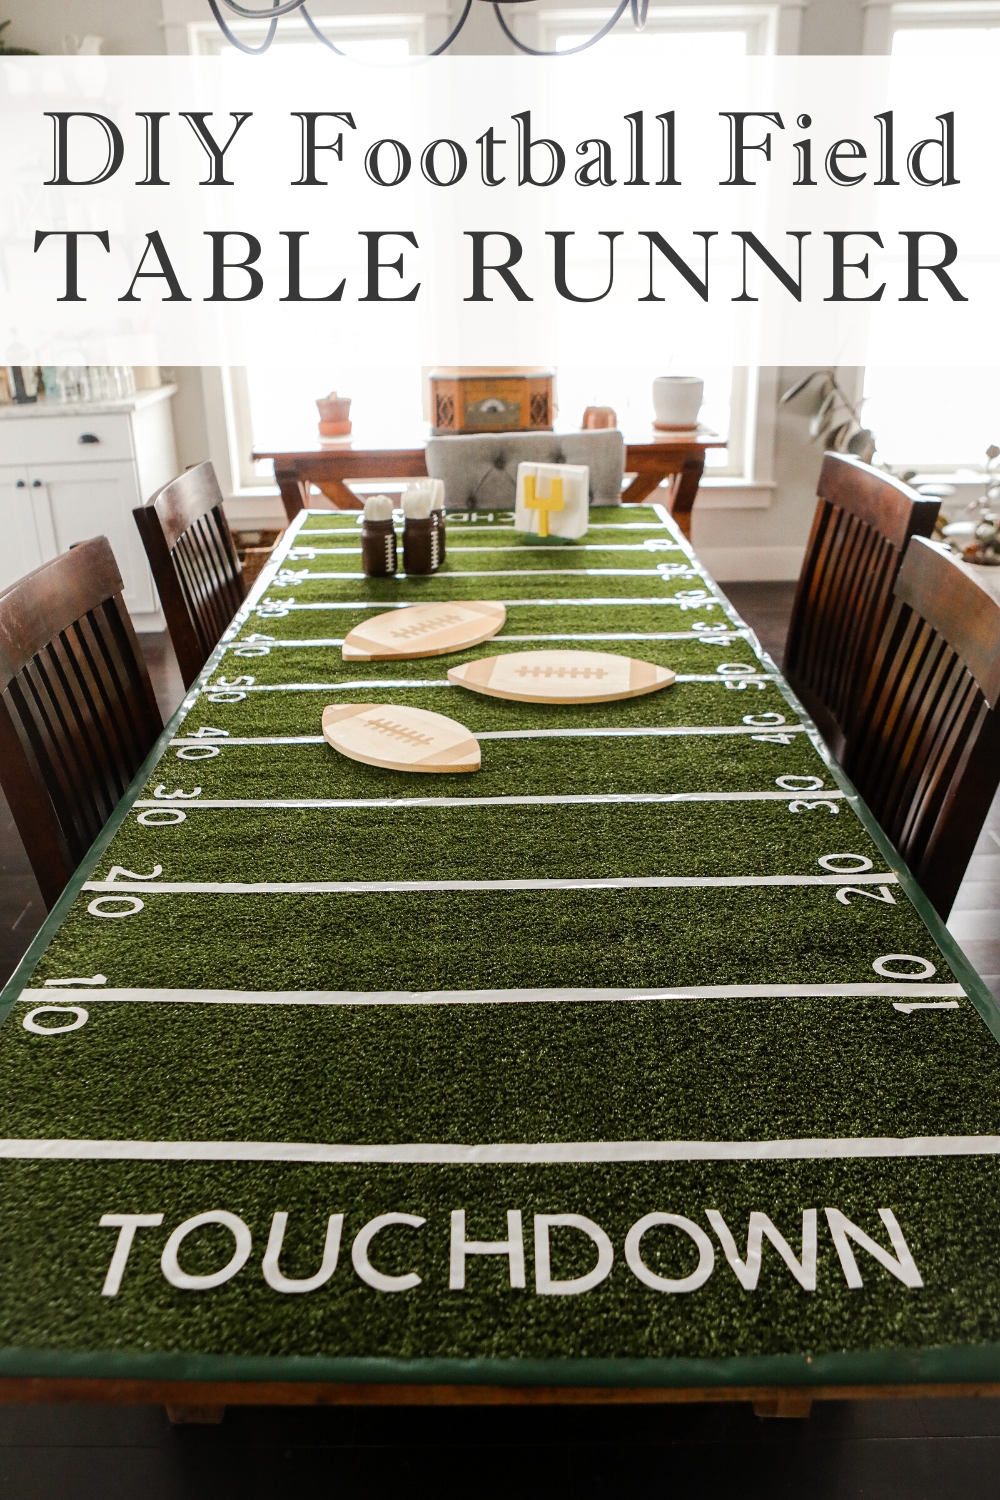 DIY Football Field Table Runner Super Bowl party Ideas